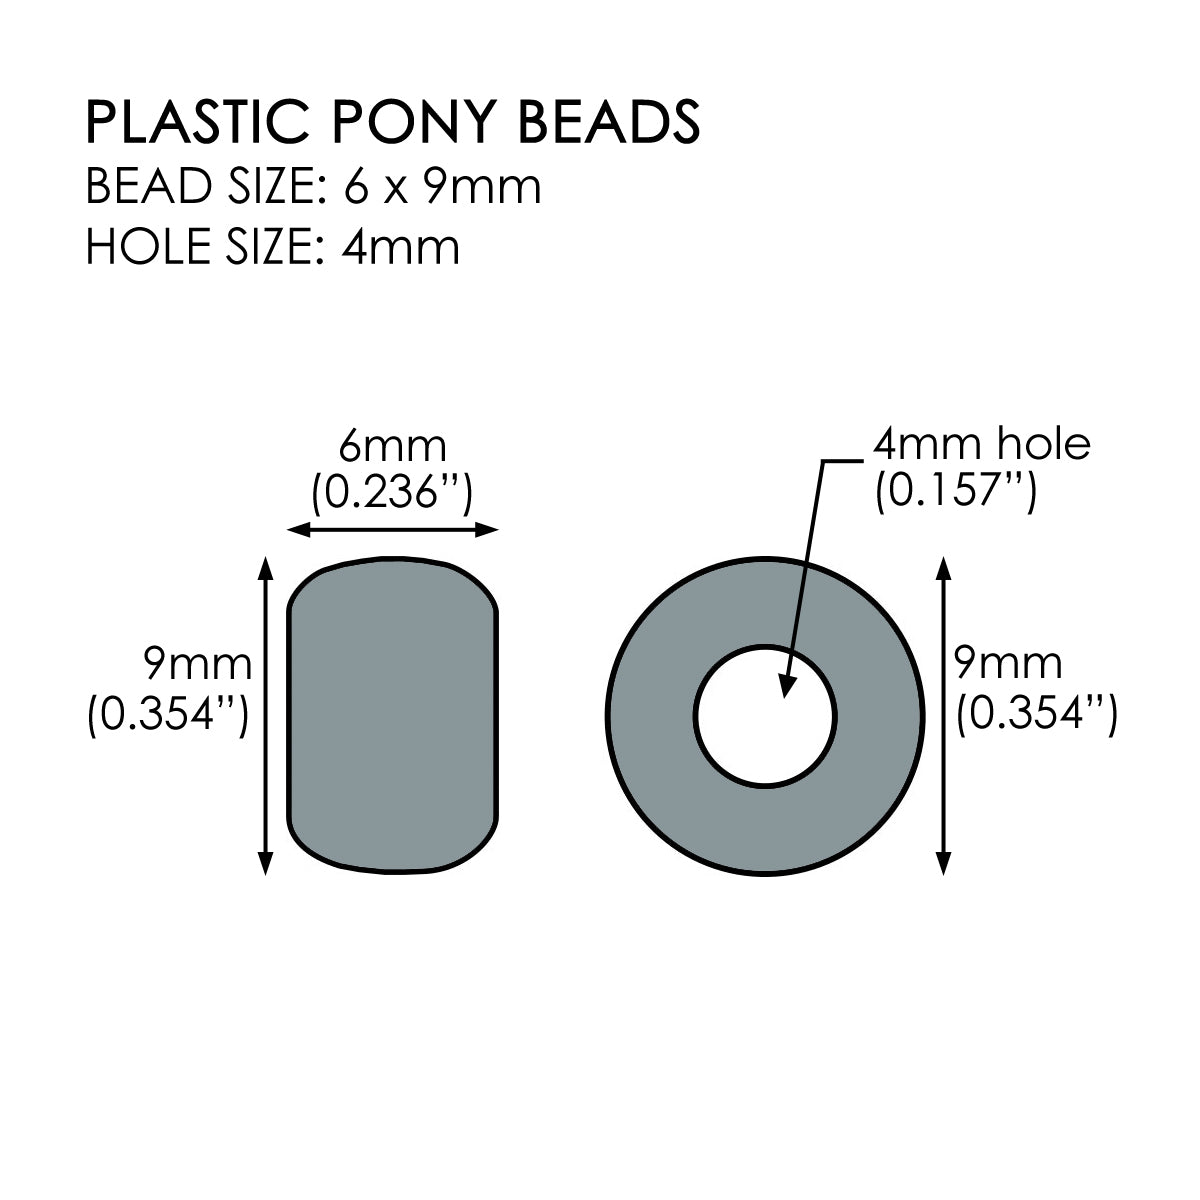 6x9mm pony bead dimension diagram